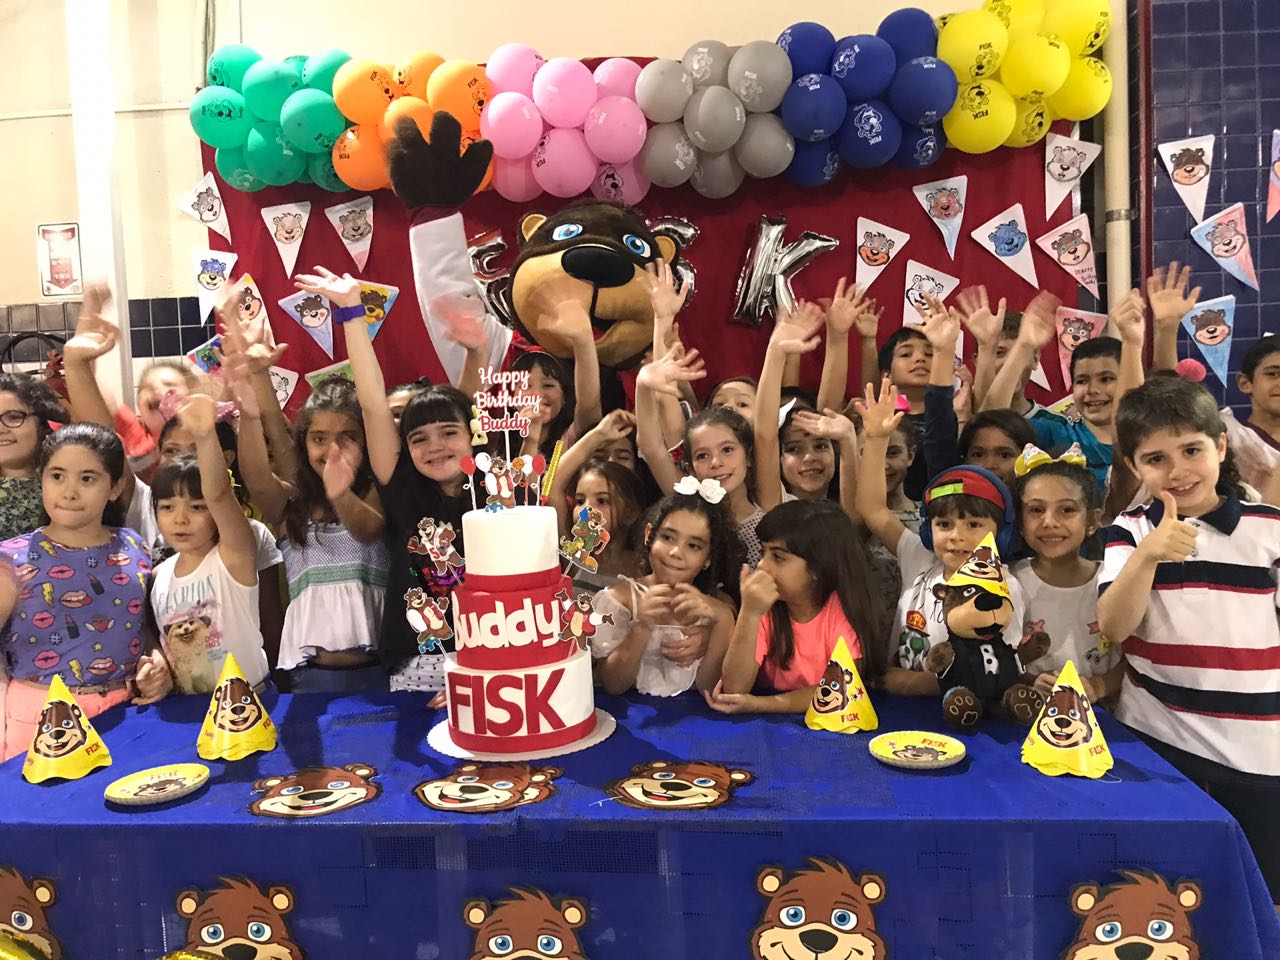 Fisk Fortaleza (Aldeota)/CE - Buddy's surprise party!